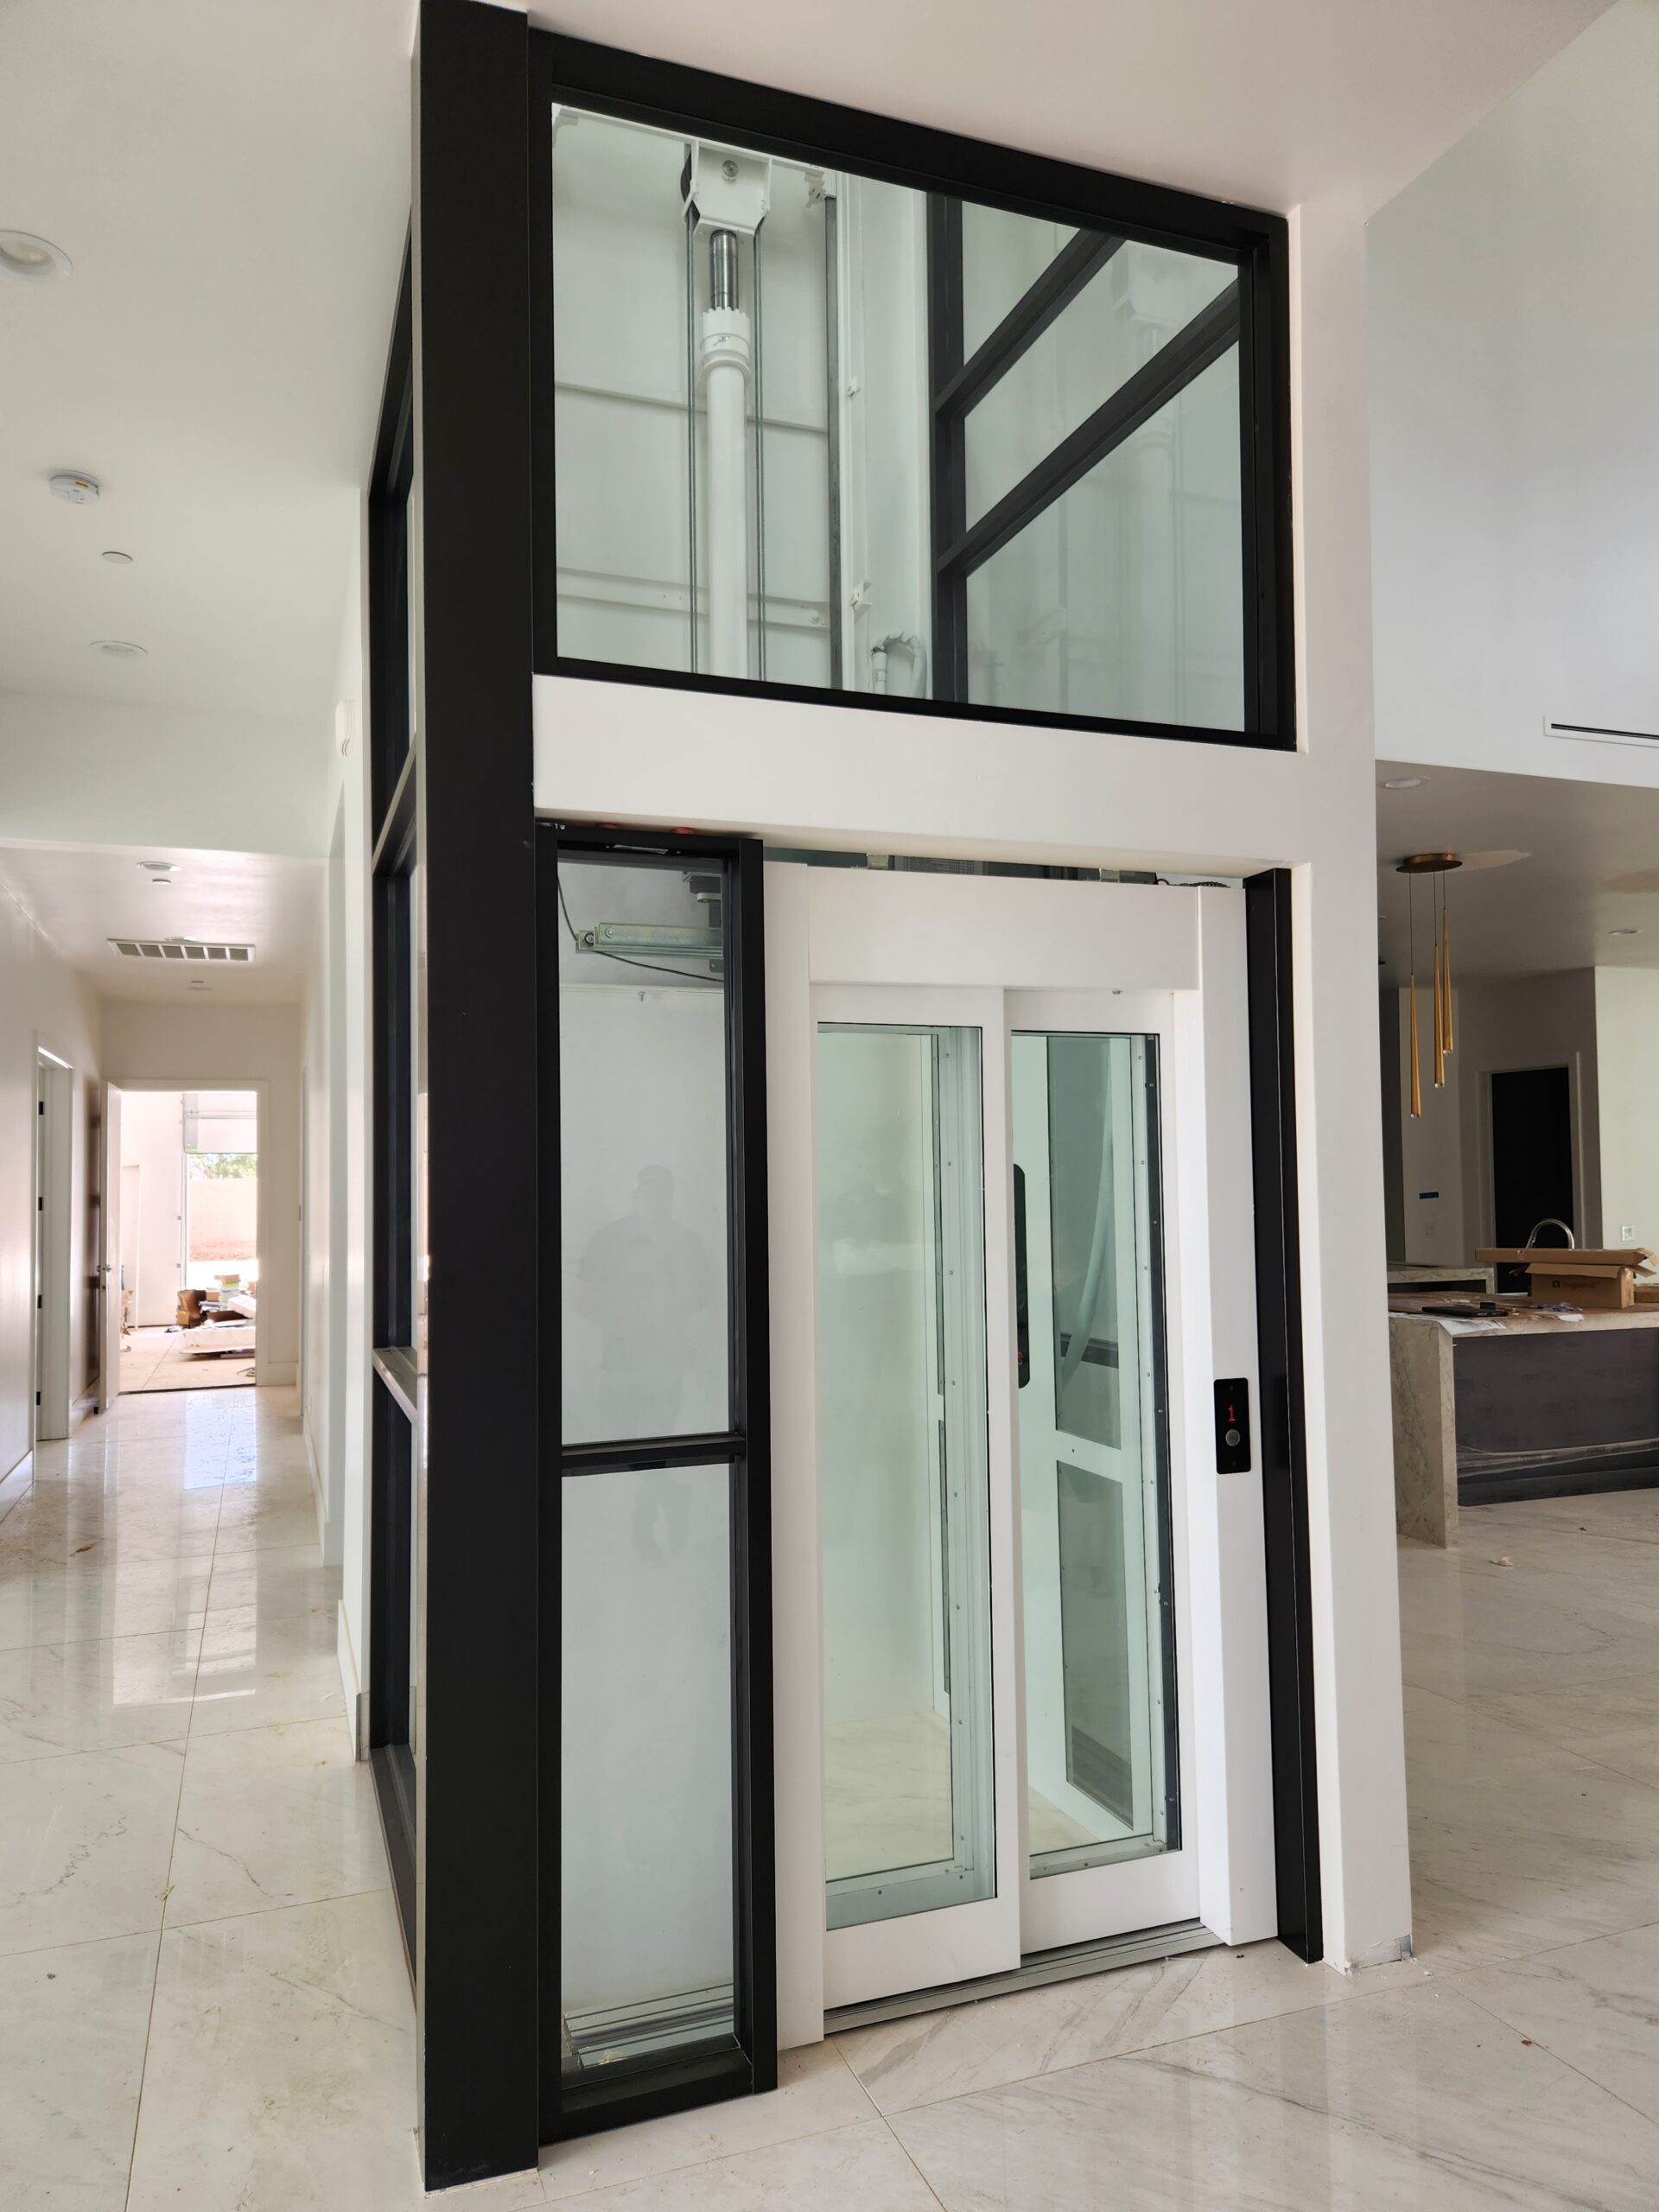 9 Examples of Luxury Home Elevators to Inspire - Arrow Lift